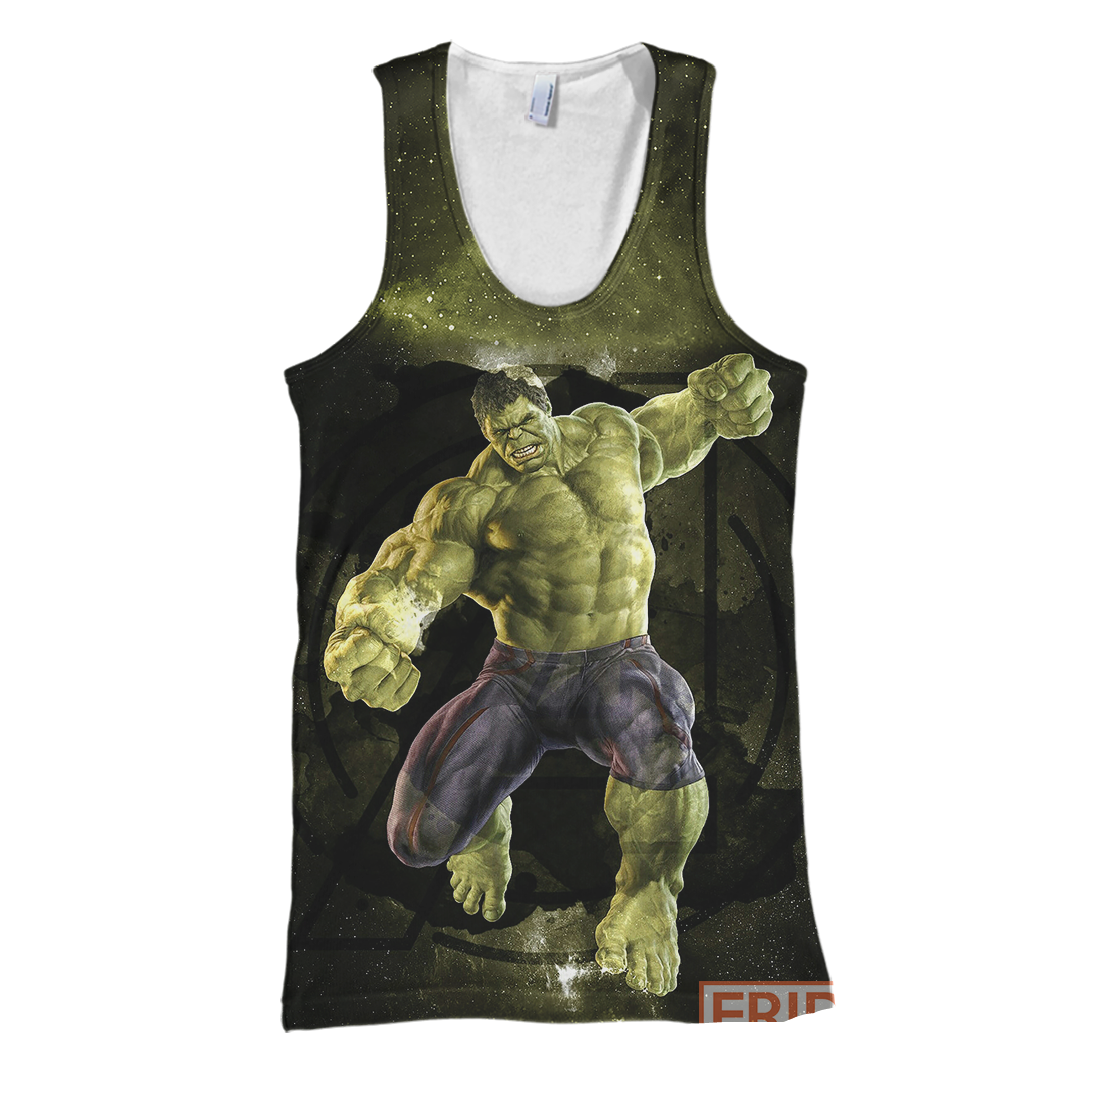 Unifinz MV Hulk Hoodie The Incredible H Galaxy T-shirt Amazing MV Hulk Shirt Sweater Tank 2026